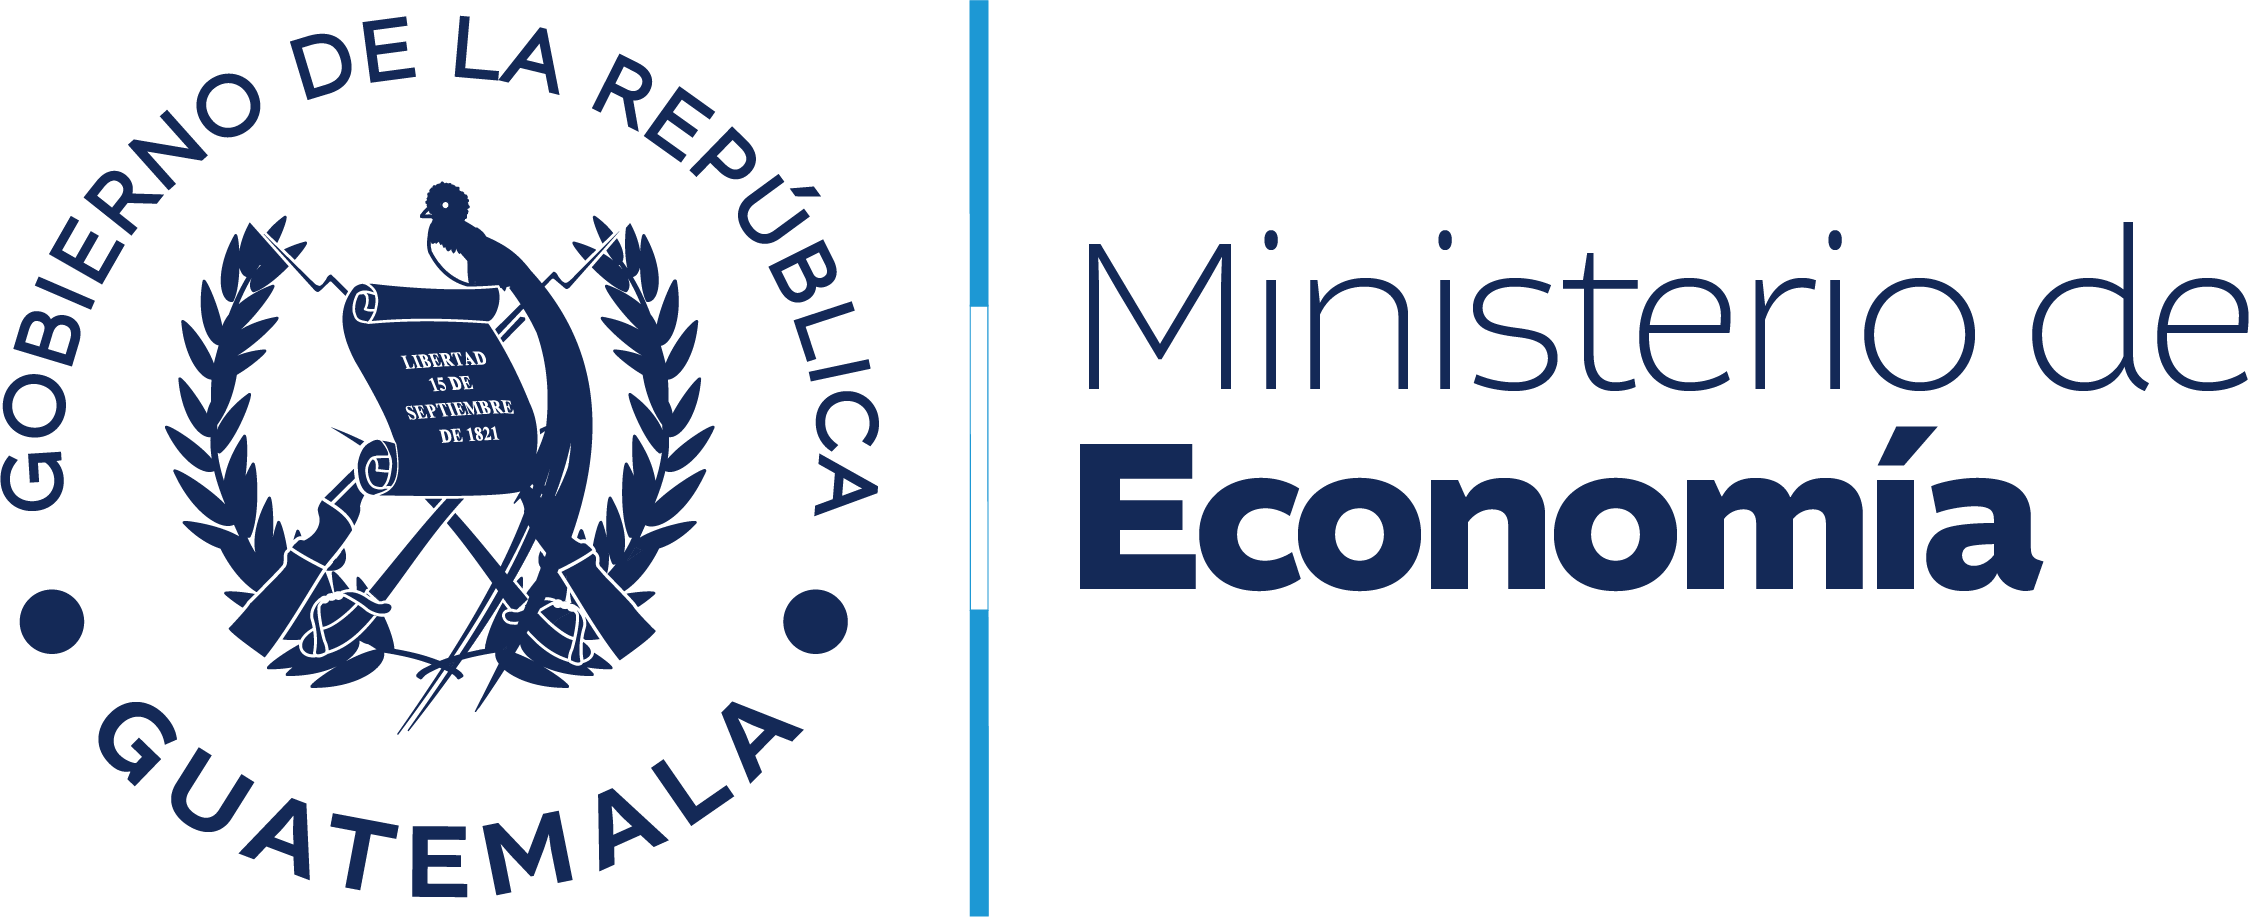 Ministerio de Economia | Gobierno de Guatemala